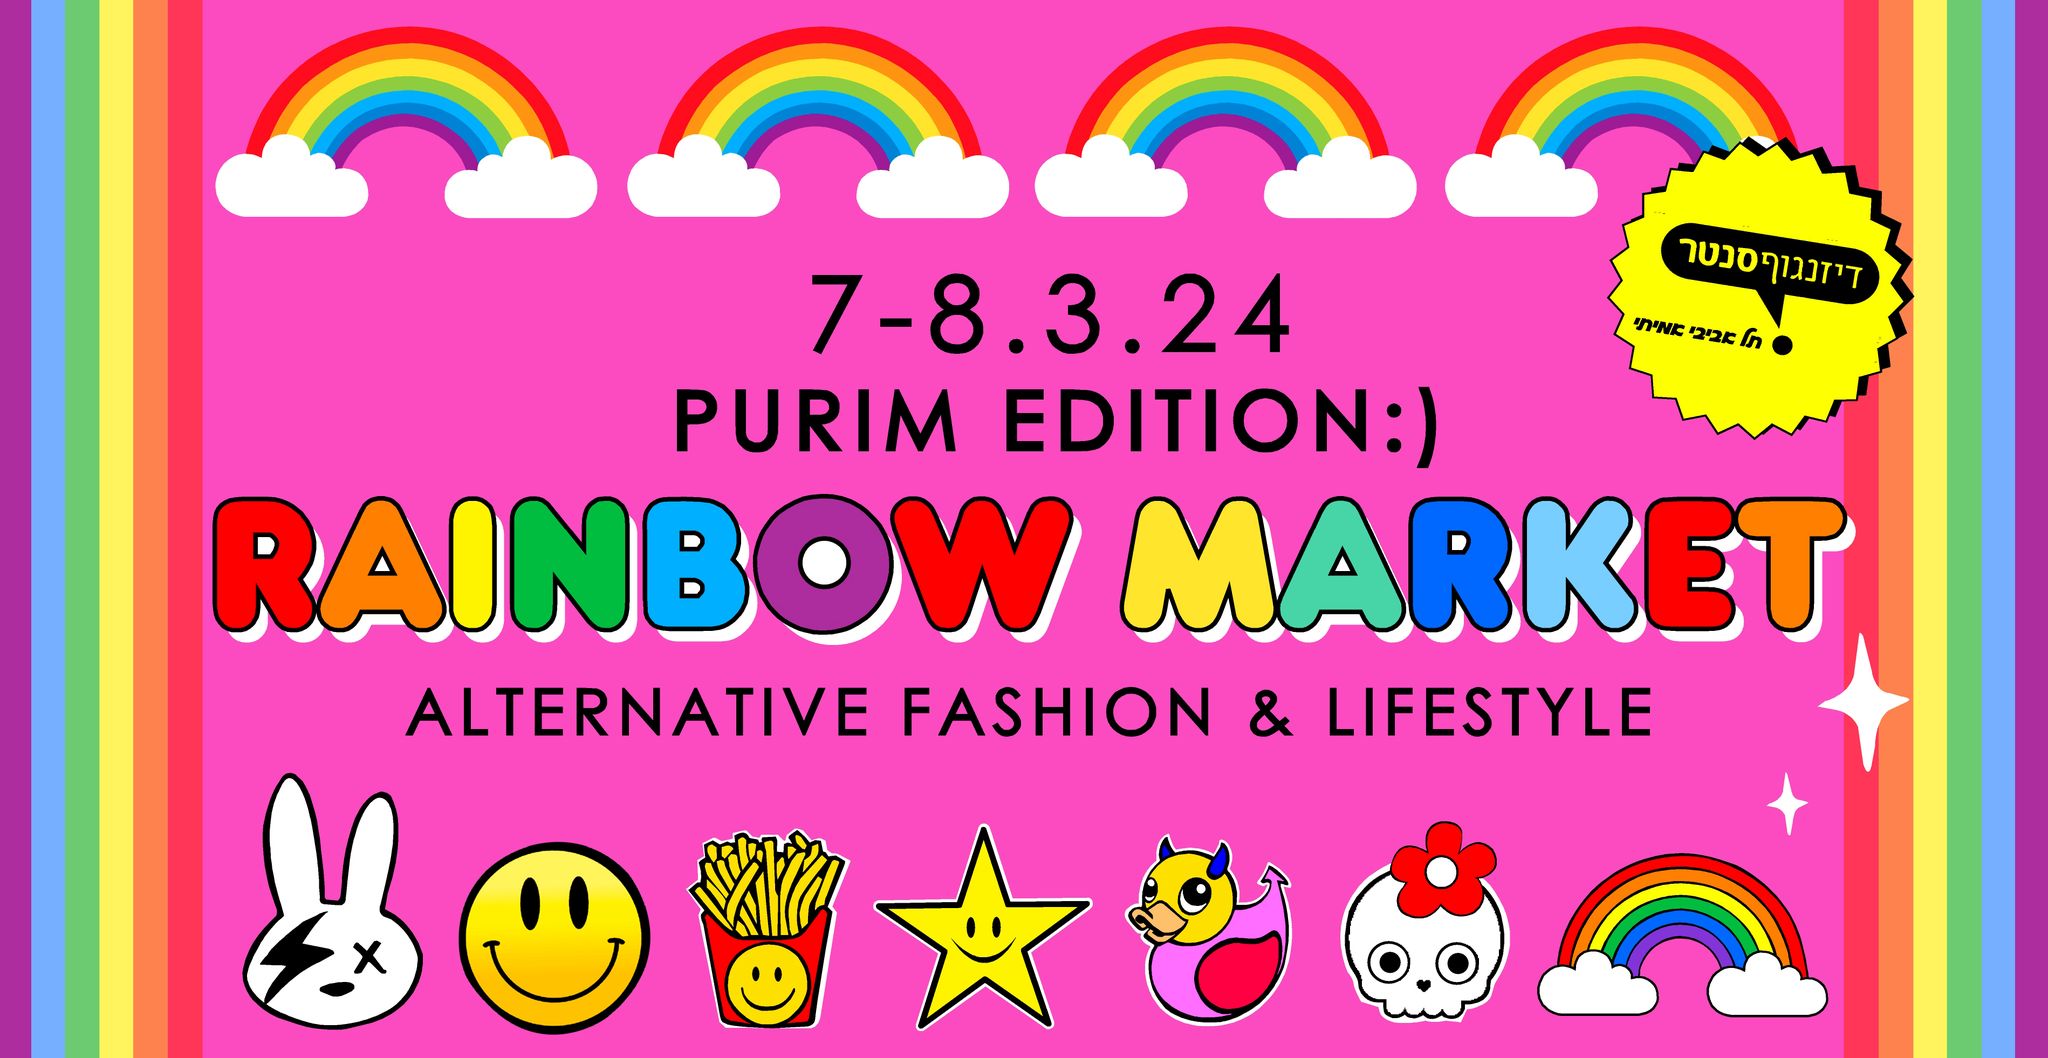 Rainbow Market Purim Edition @ Dizengoff Center